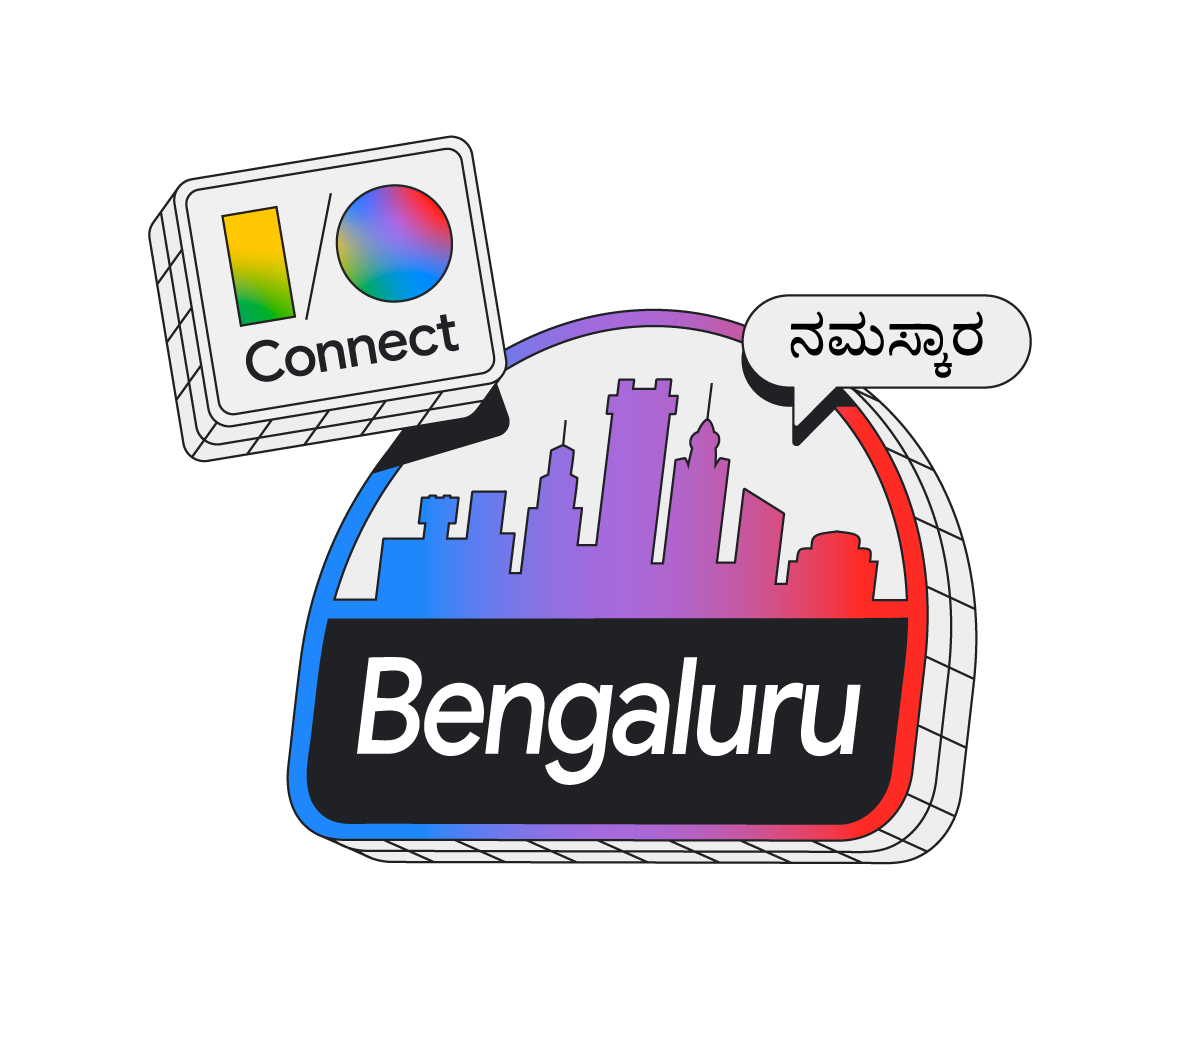 Google I/O Connect in Bengaluru